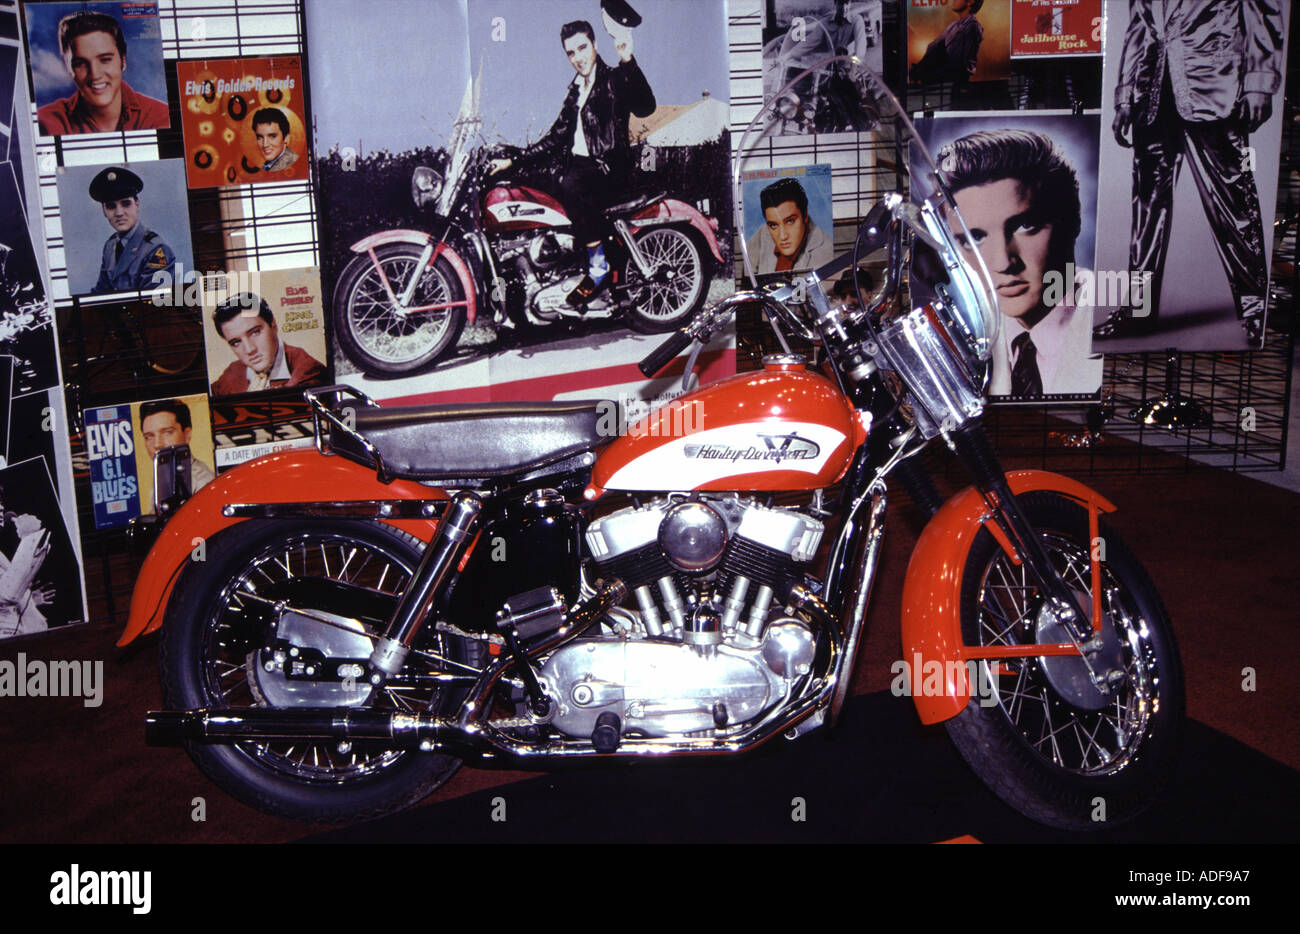 Harley davidson elvis presley hi-res stock photography and images - Alamy